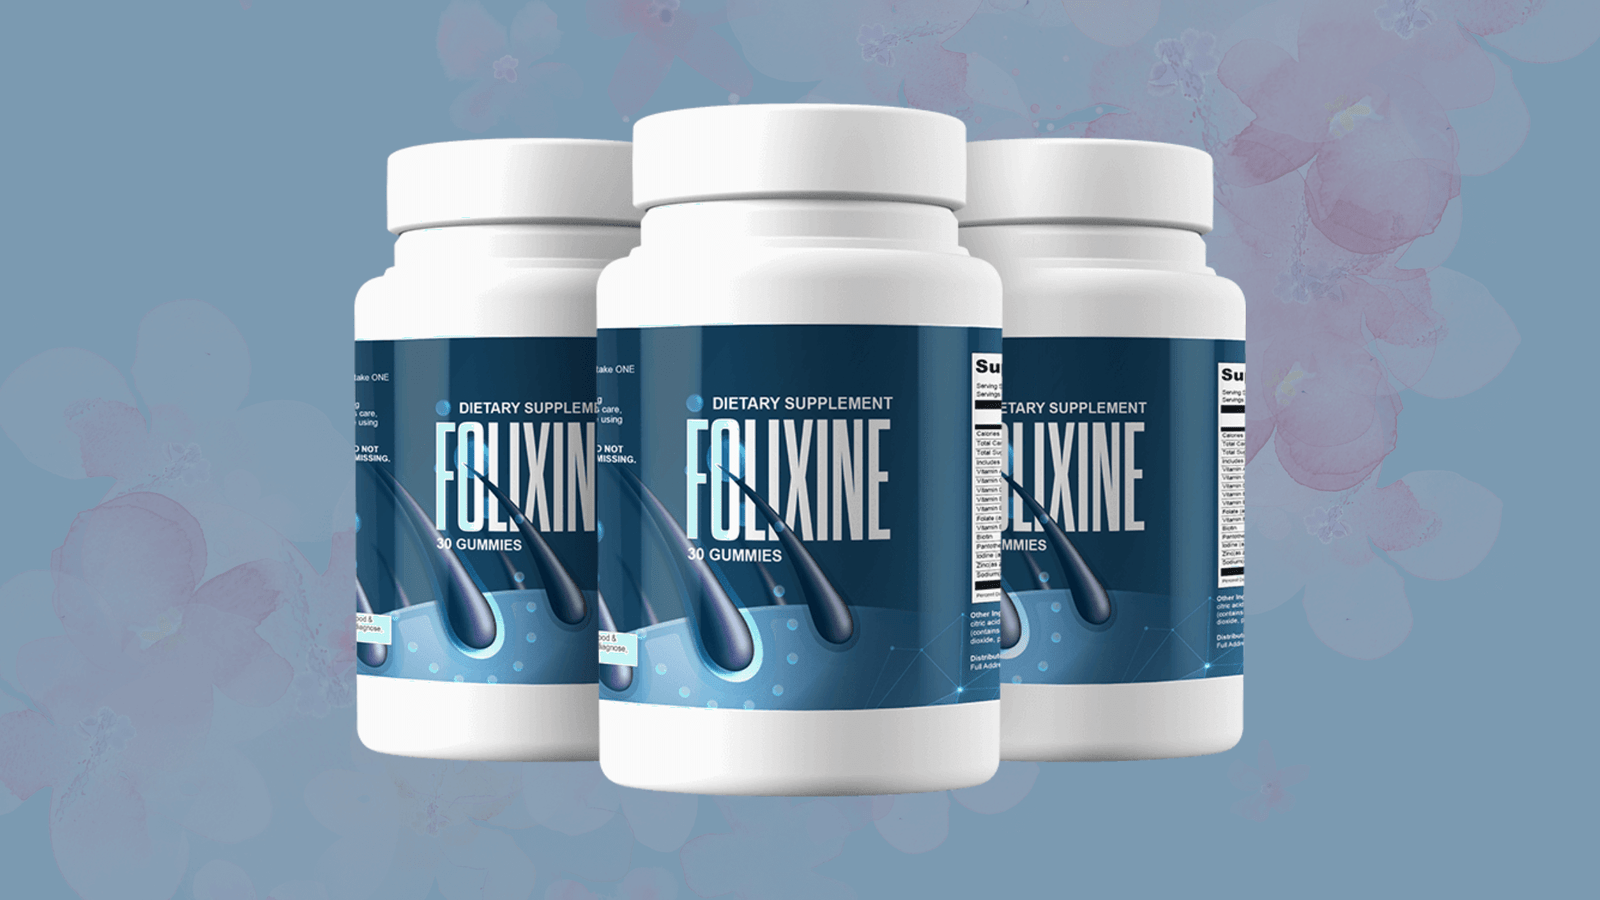 Folixine supplement